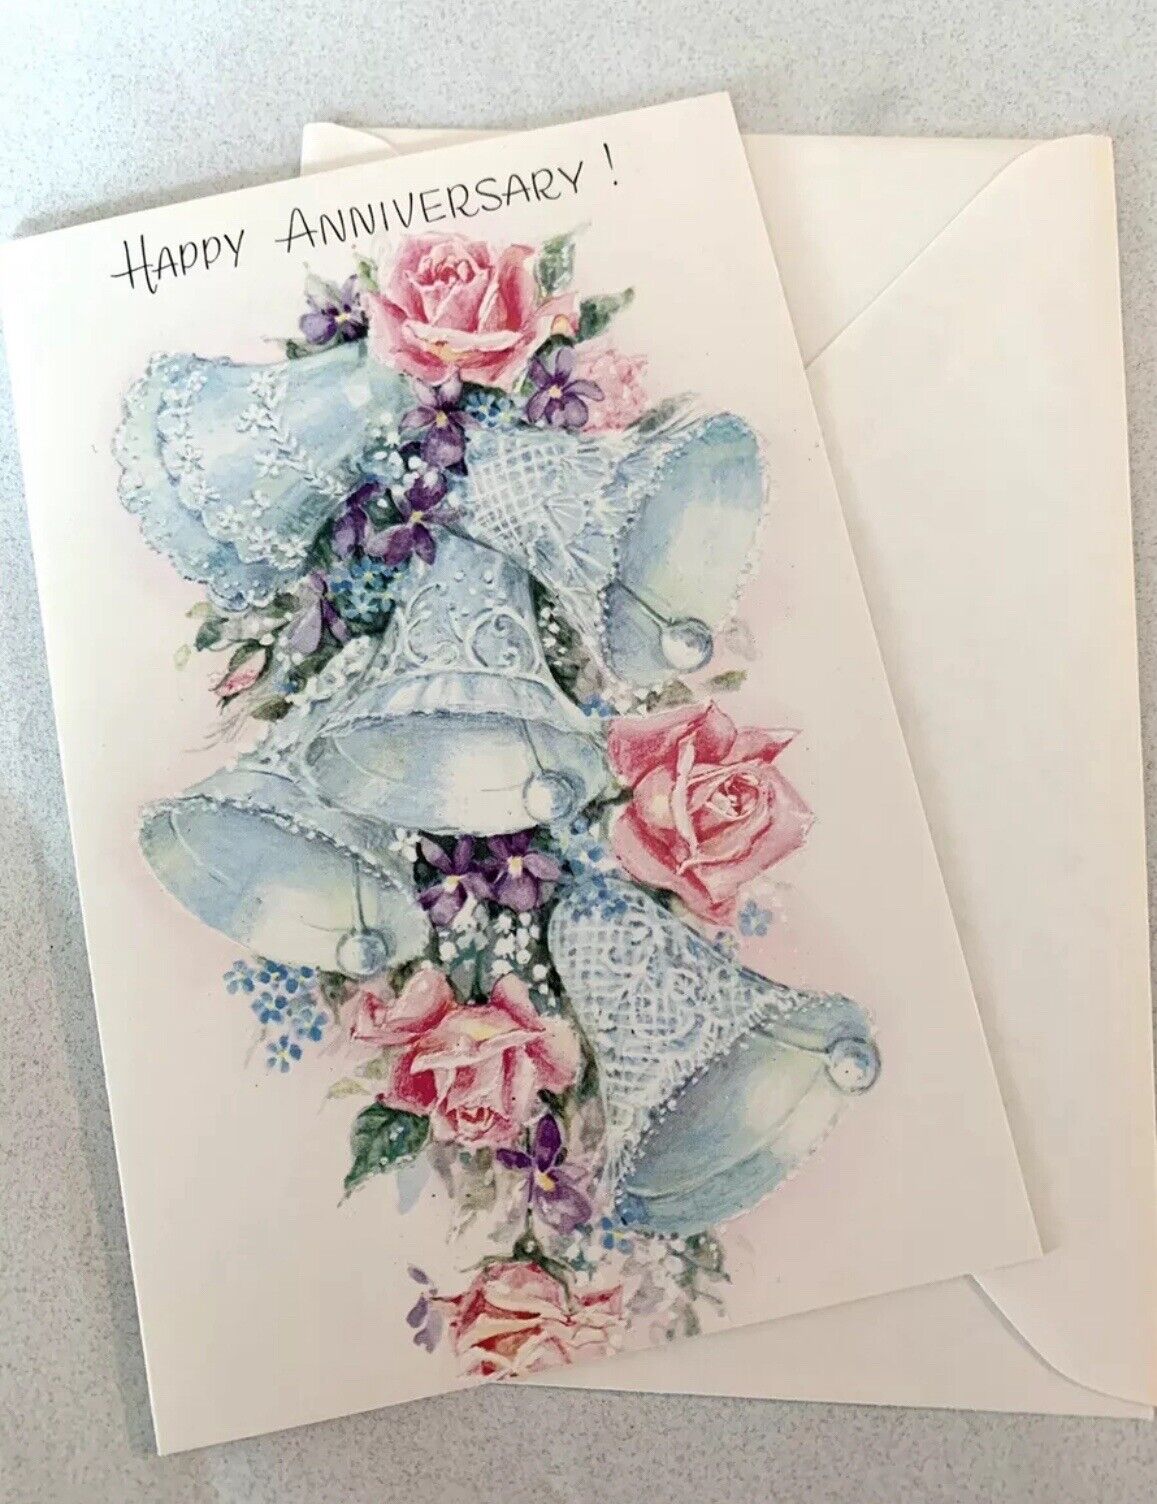 Vintage Fantusy Greeting Card & Envelope Happy Anniversary Wedding Bells Floral